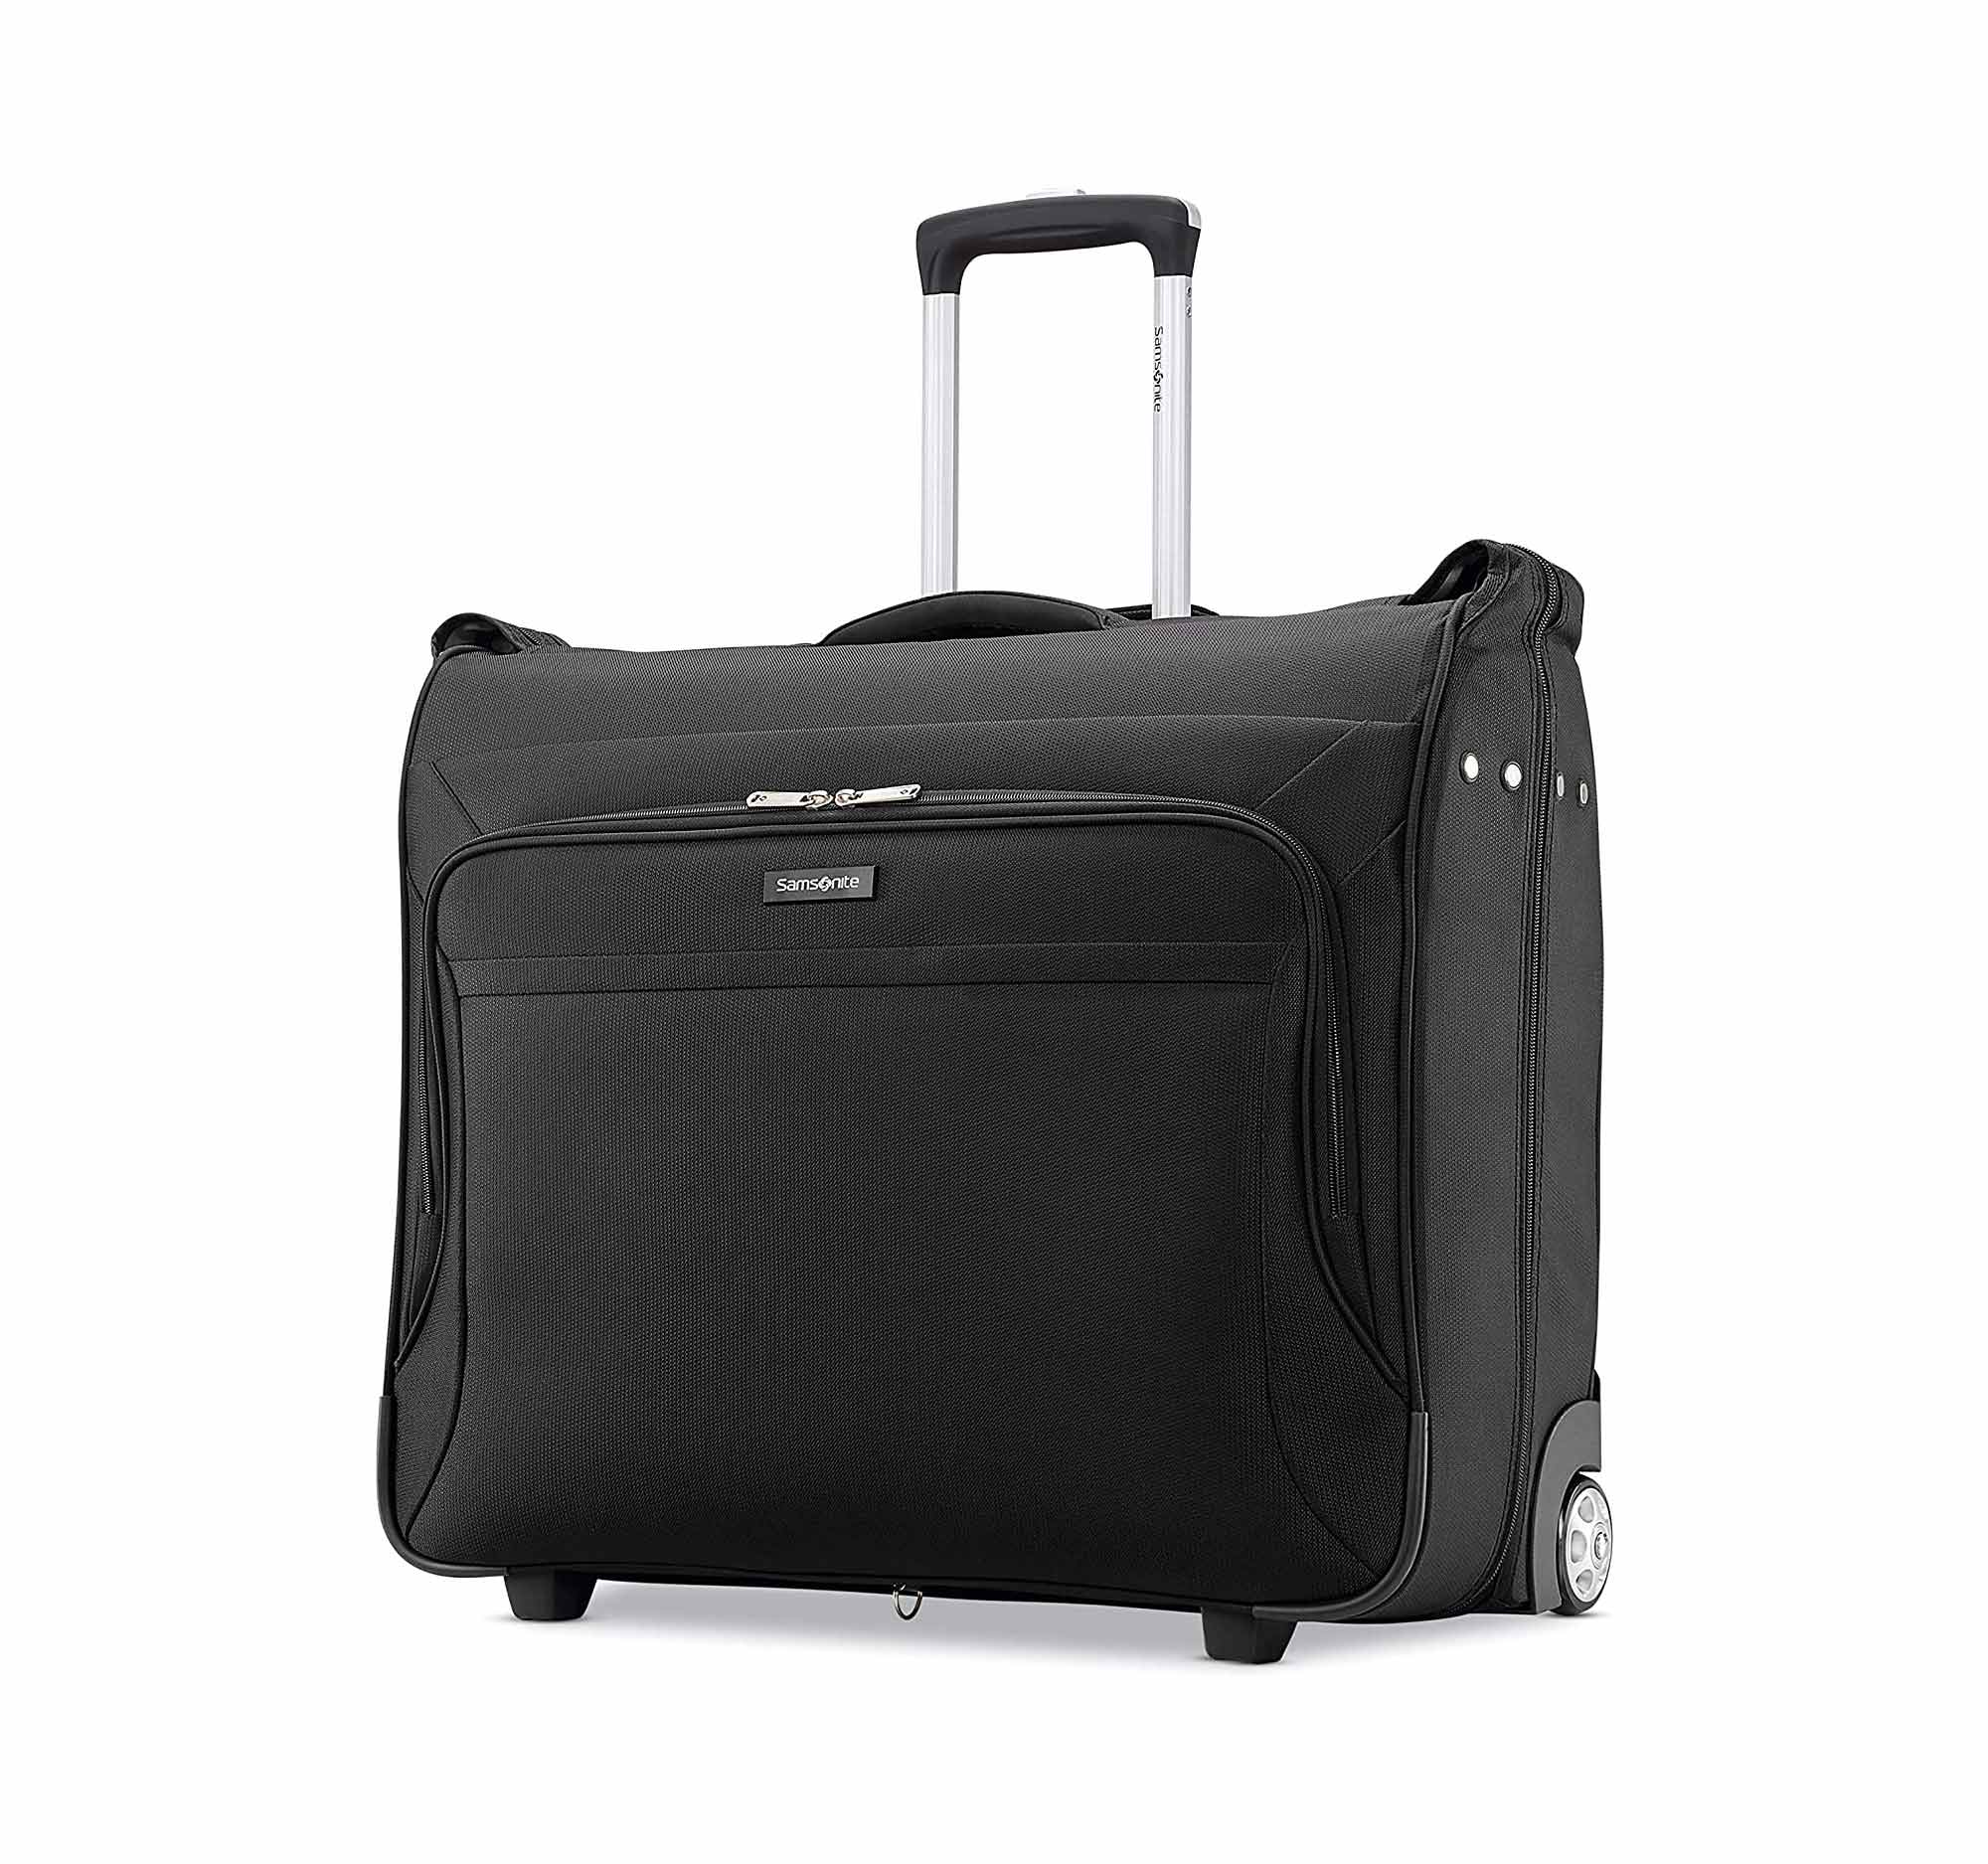 Samsonite Ascella X Softside Luggage, Black Garment Bag